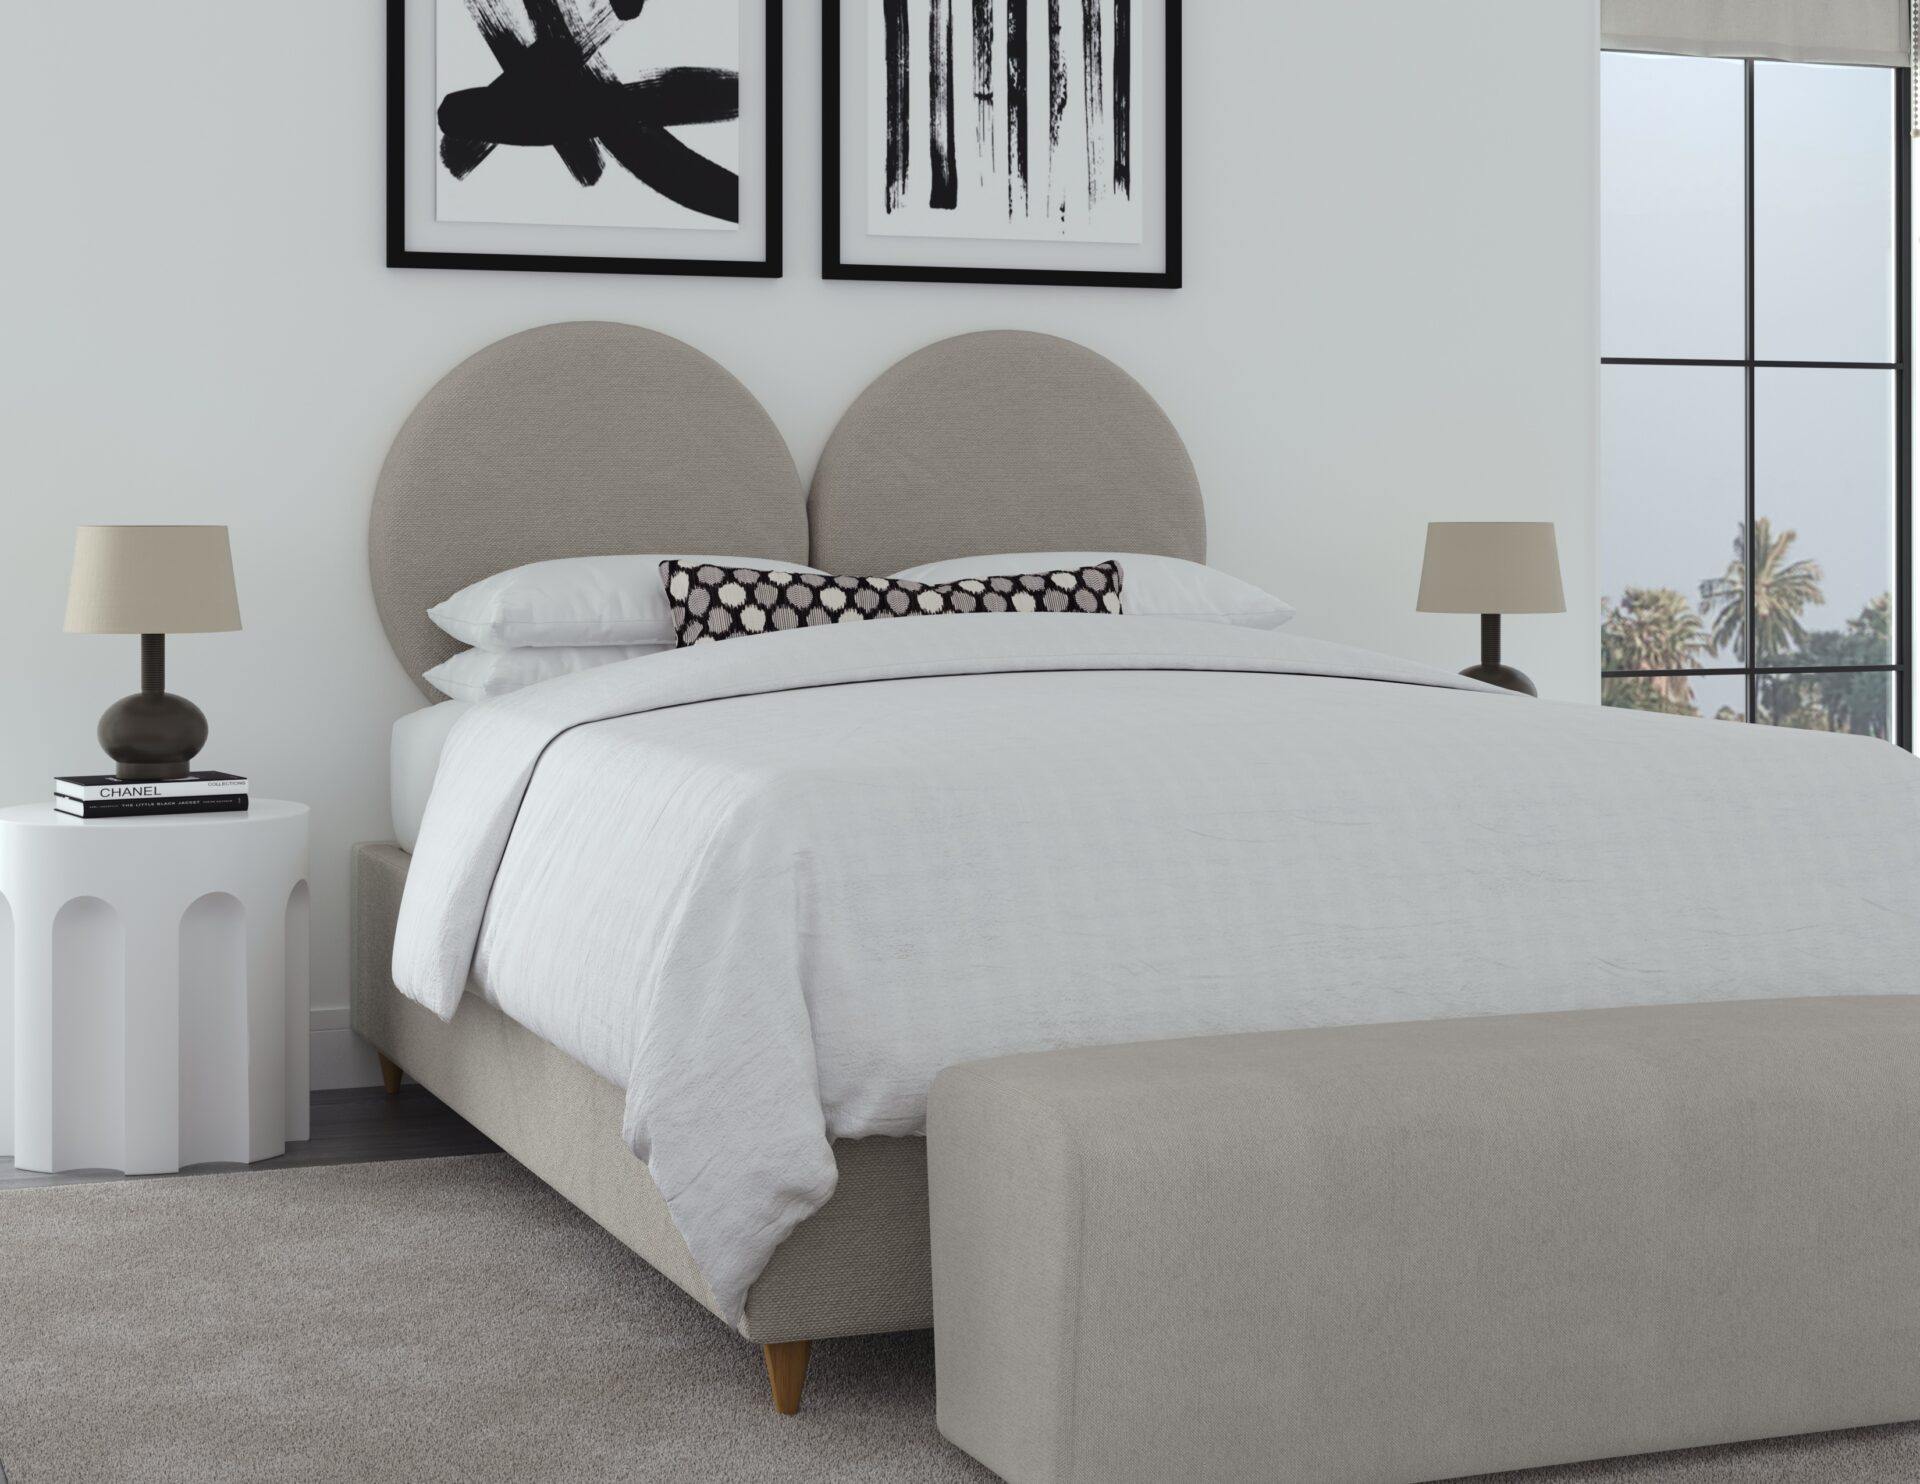 SPHEROID(DUO)-Freestanding-Upholstered-Bed-Blend-Home-Furnishings